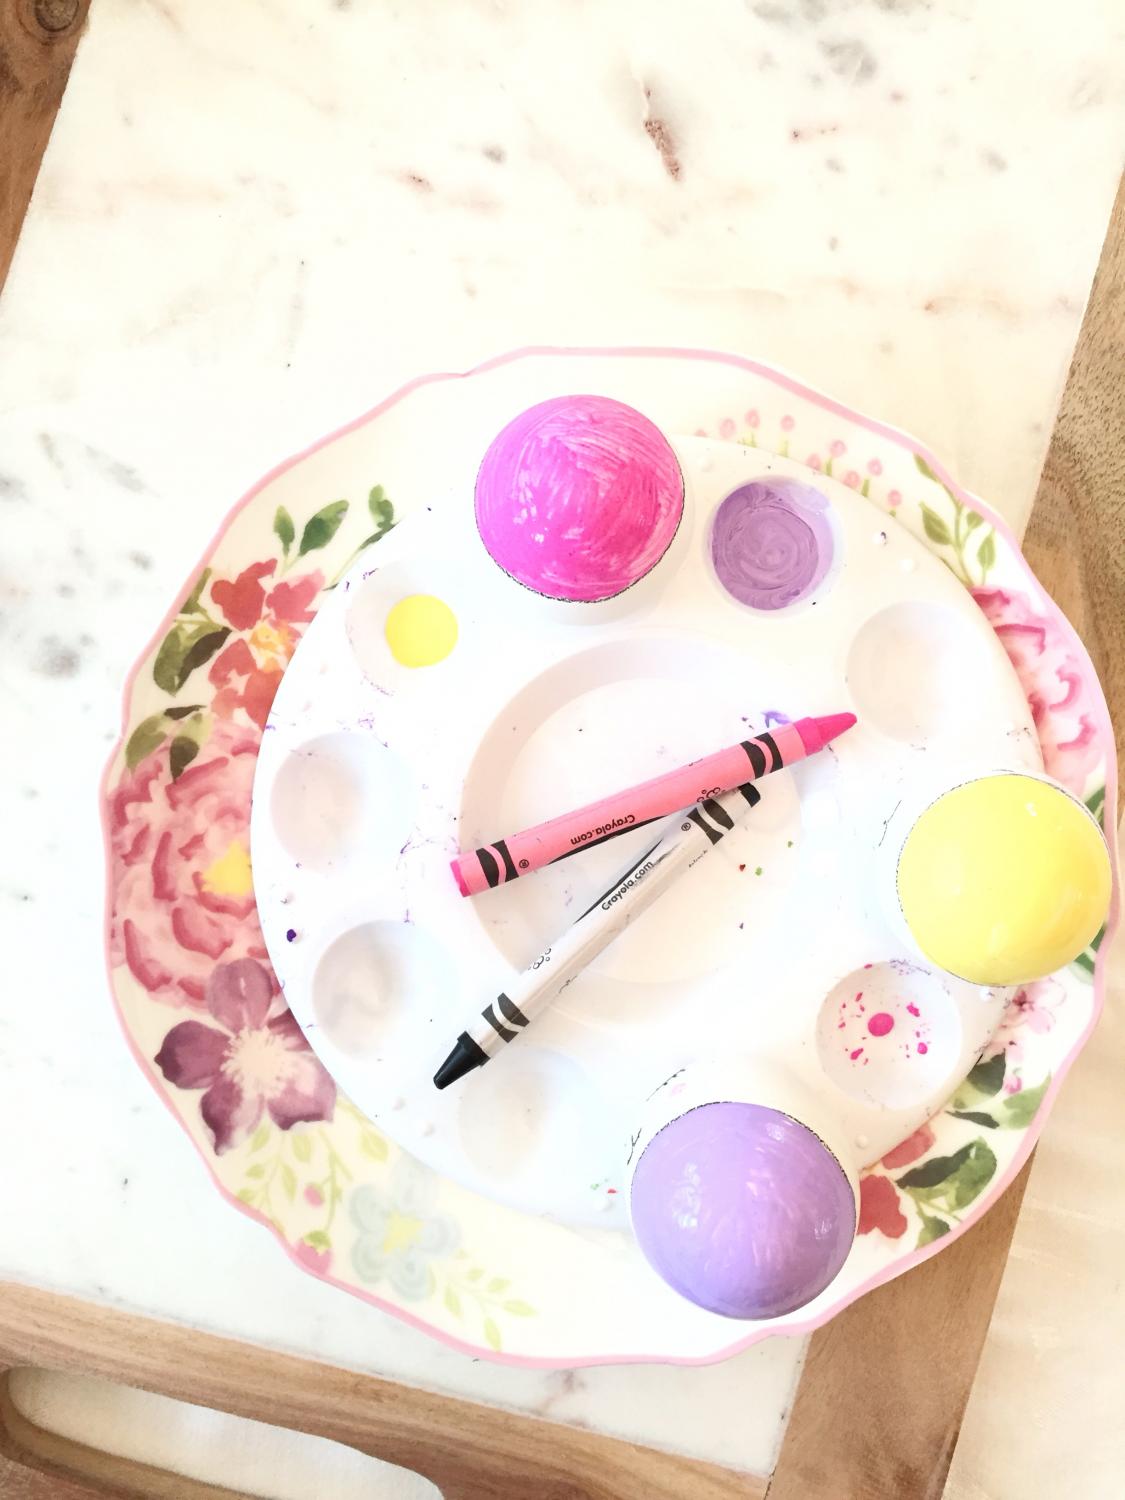 Adorable friends painted eggs